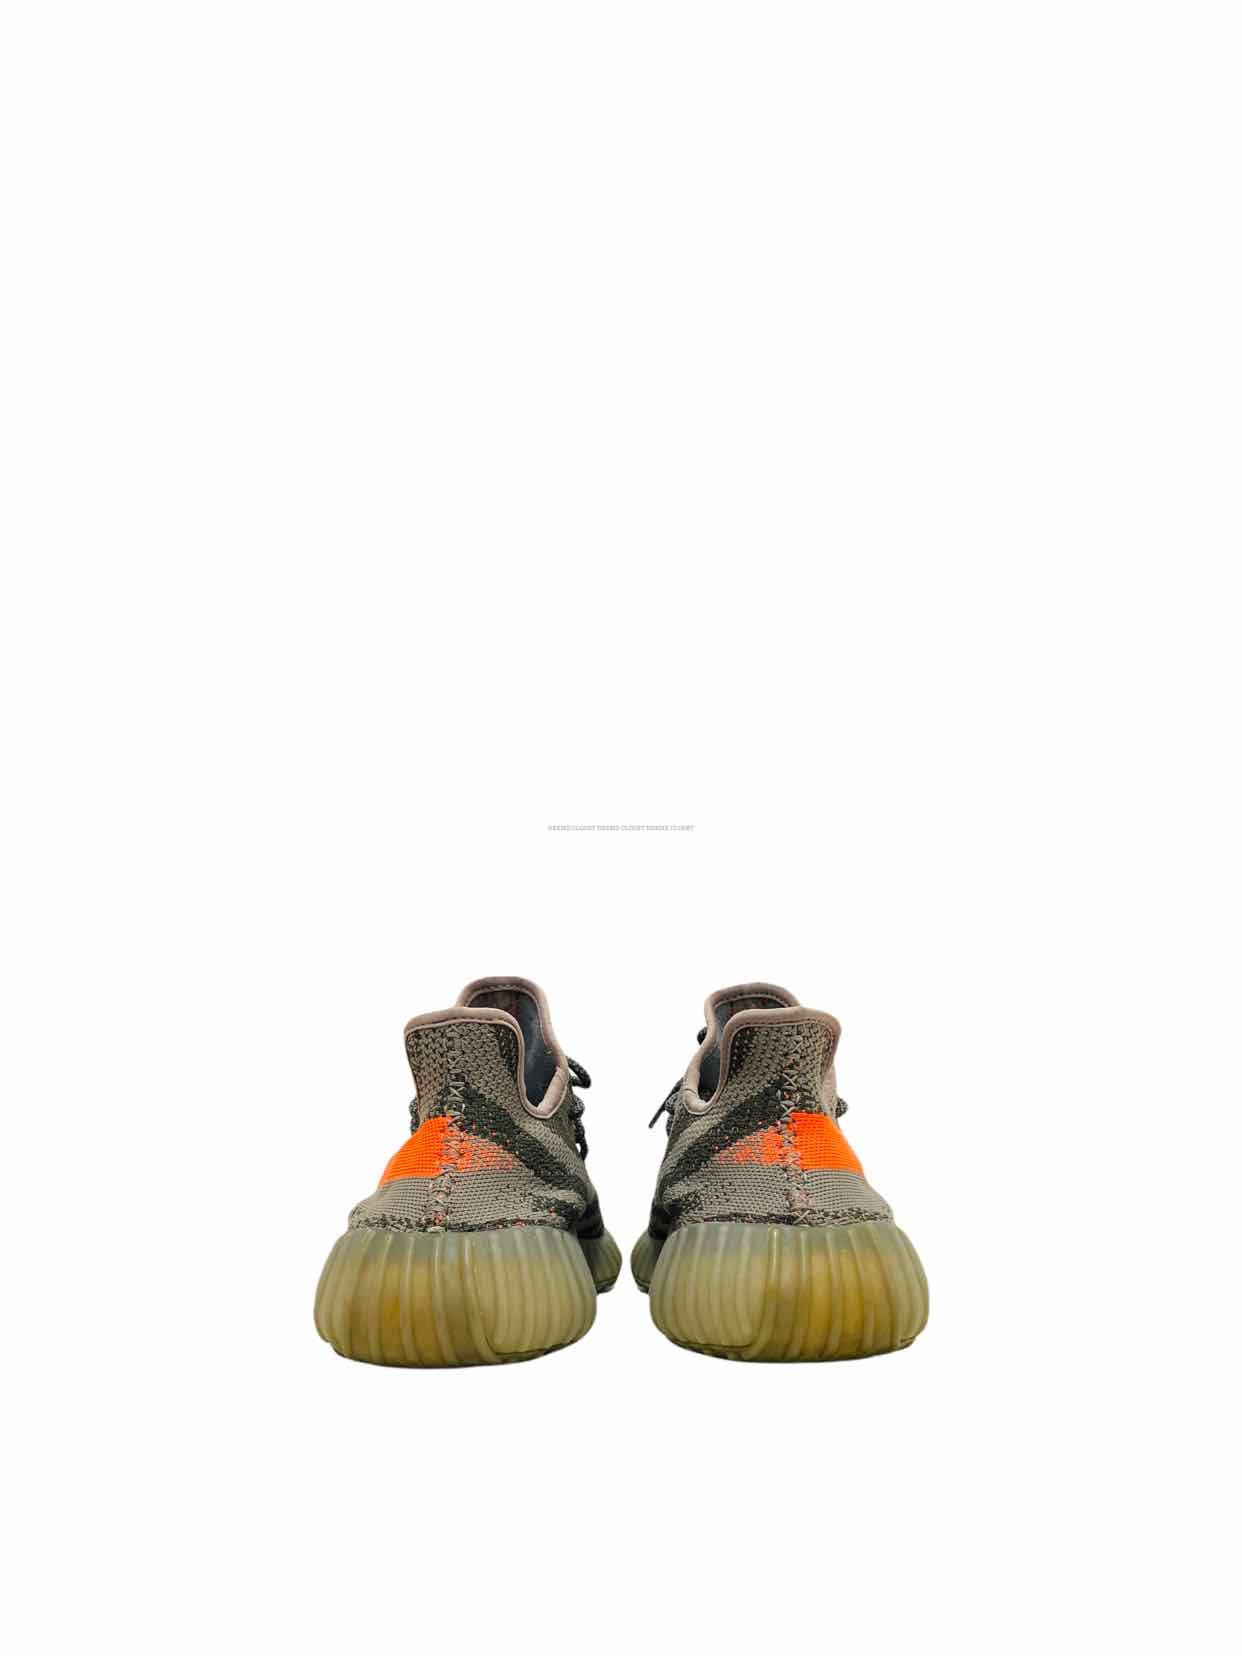 ADIDAS Yeezy 500 Grey w/ Orange Sneakers